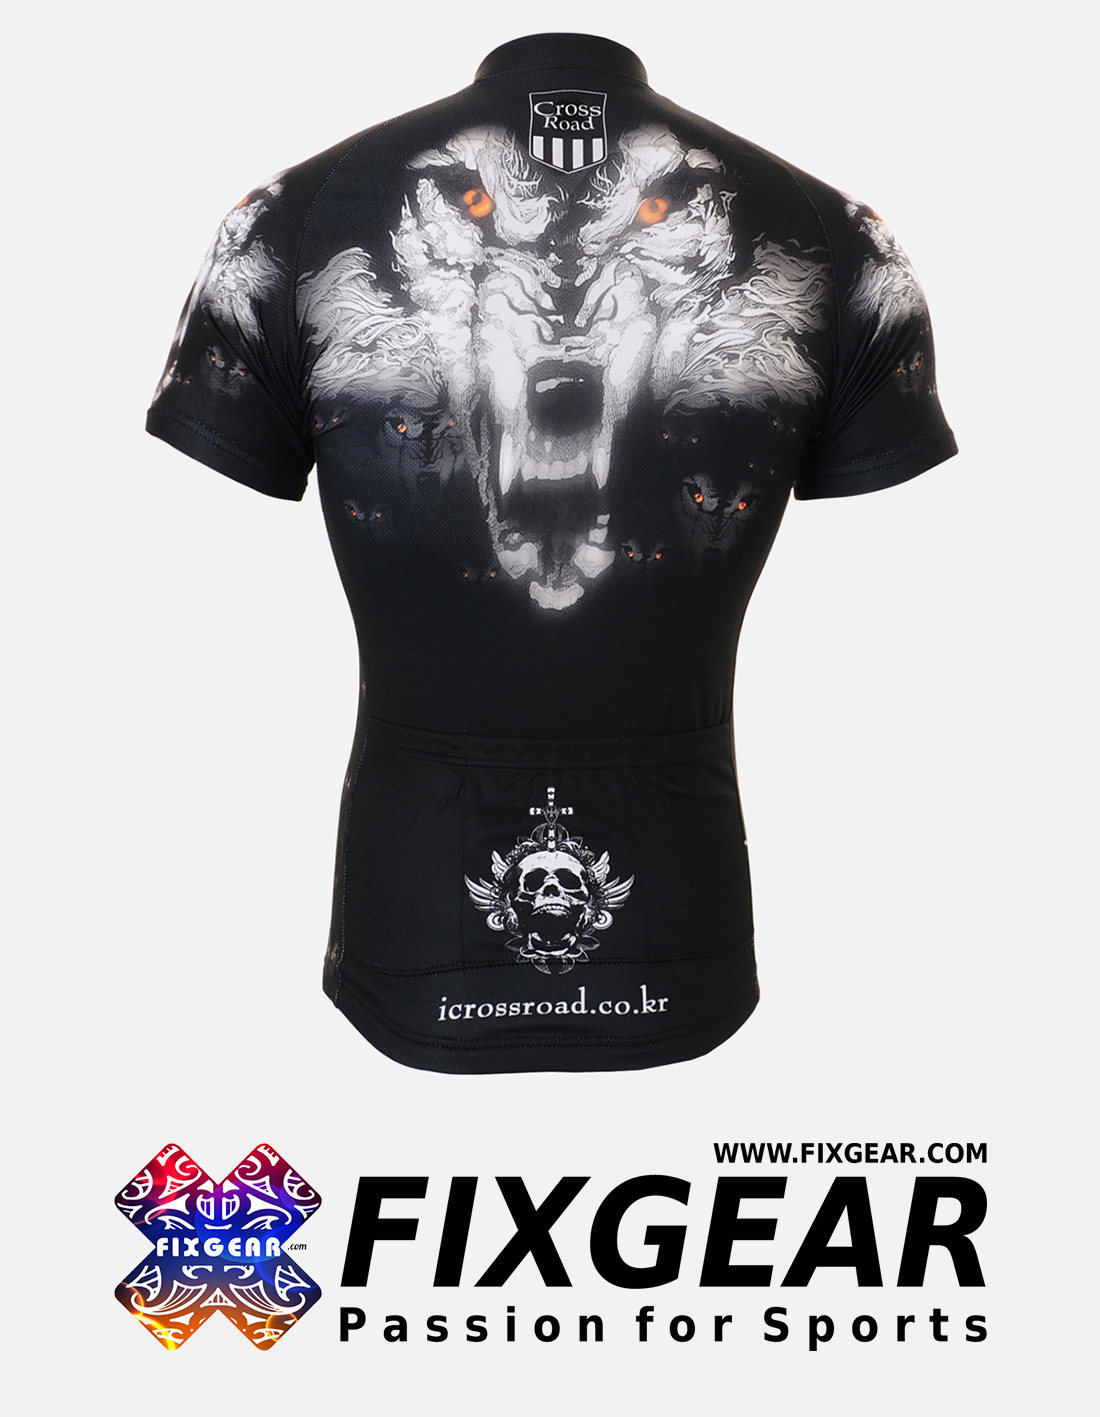 FIXGEAR CS-1802 Men's Cycling  Jersey Short Sleeve